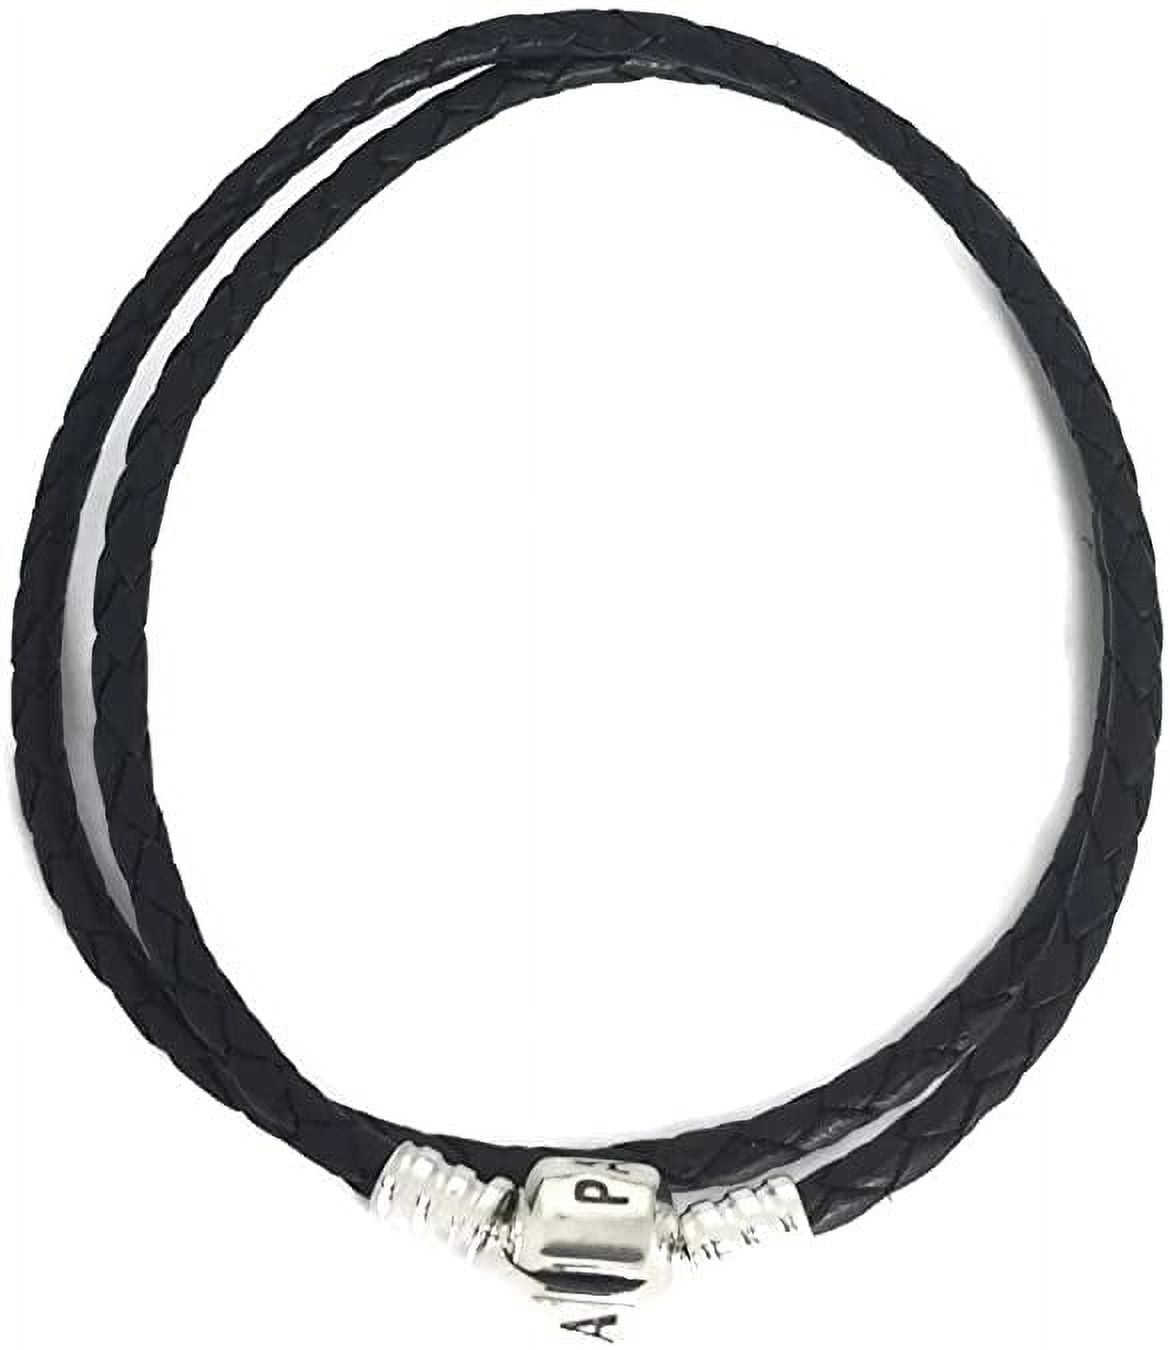 SALE 💗 PANDORA DOUBLE LEATHER BRACELET WITH DISNEY MICKEY MOUSE CHARM 😍,  Women's Fashion, Jewelry & Organizers, Bracelets on Carousell